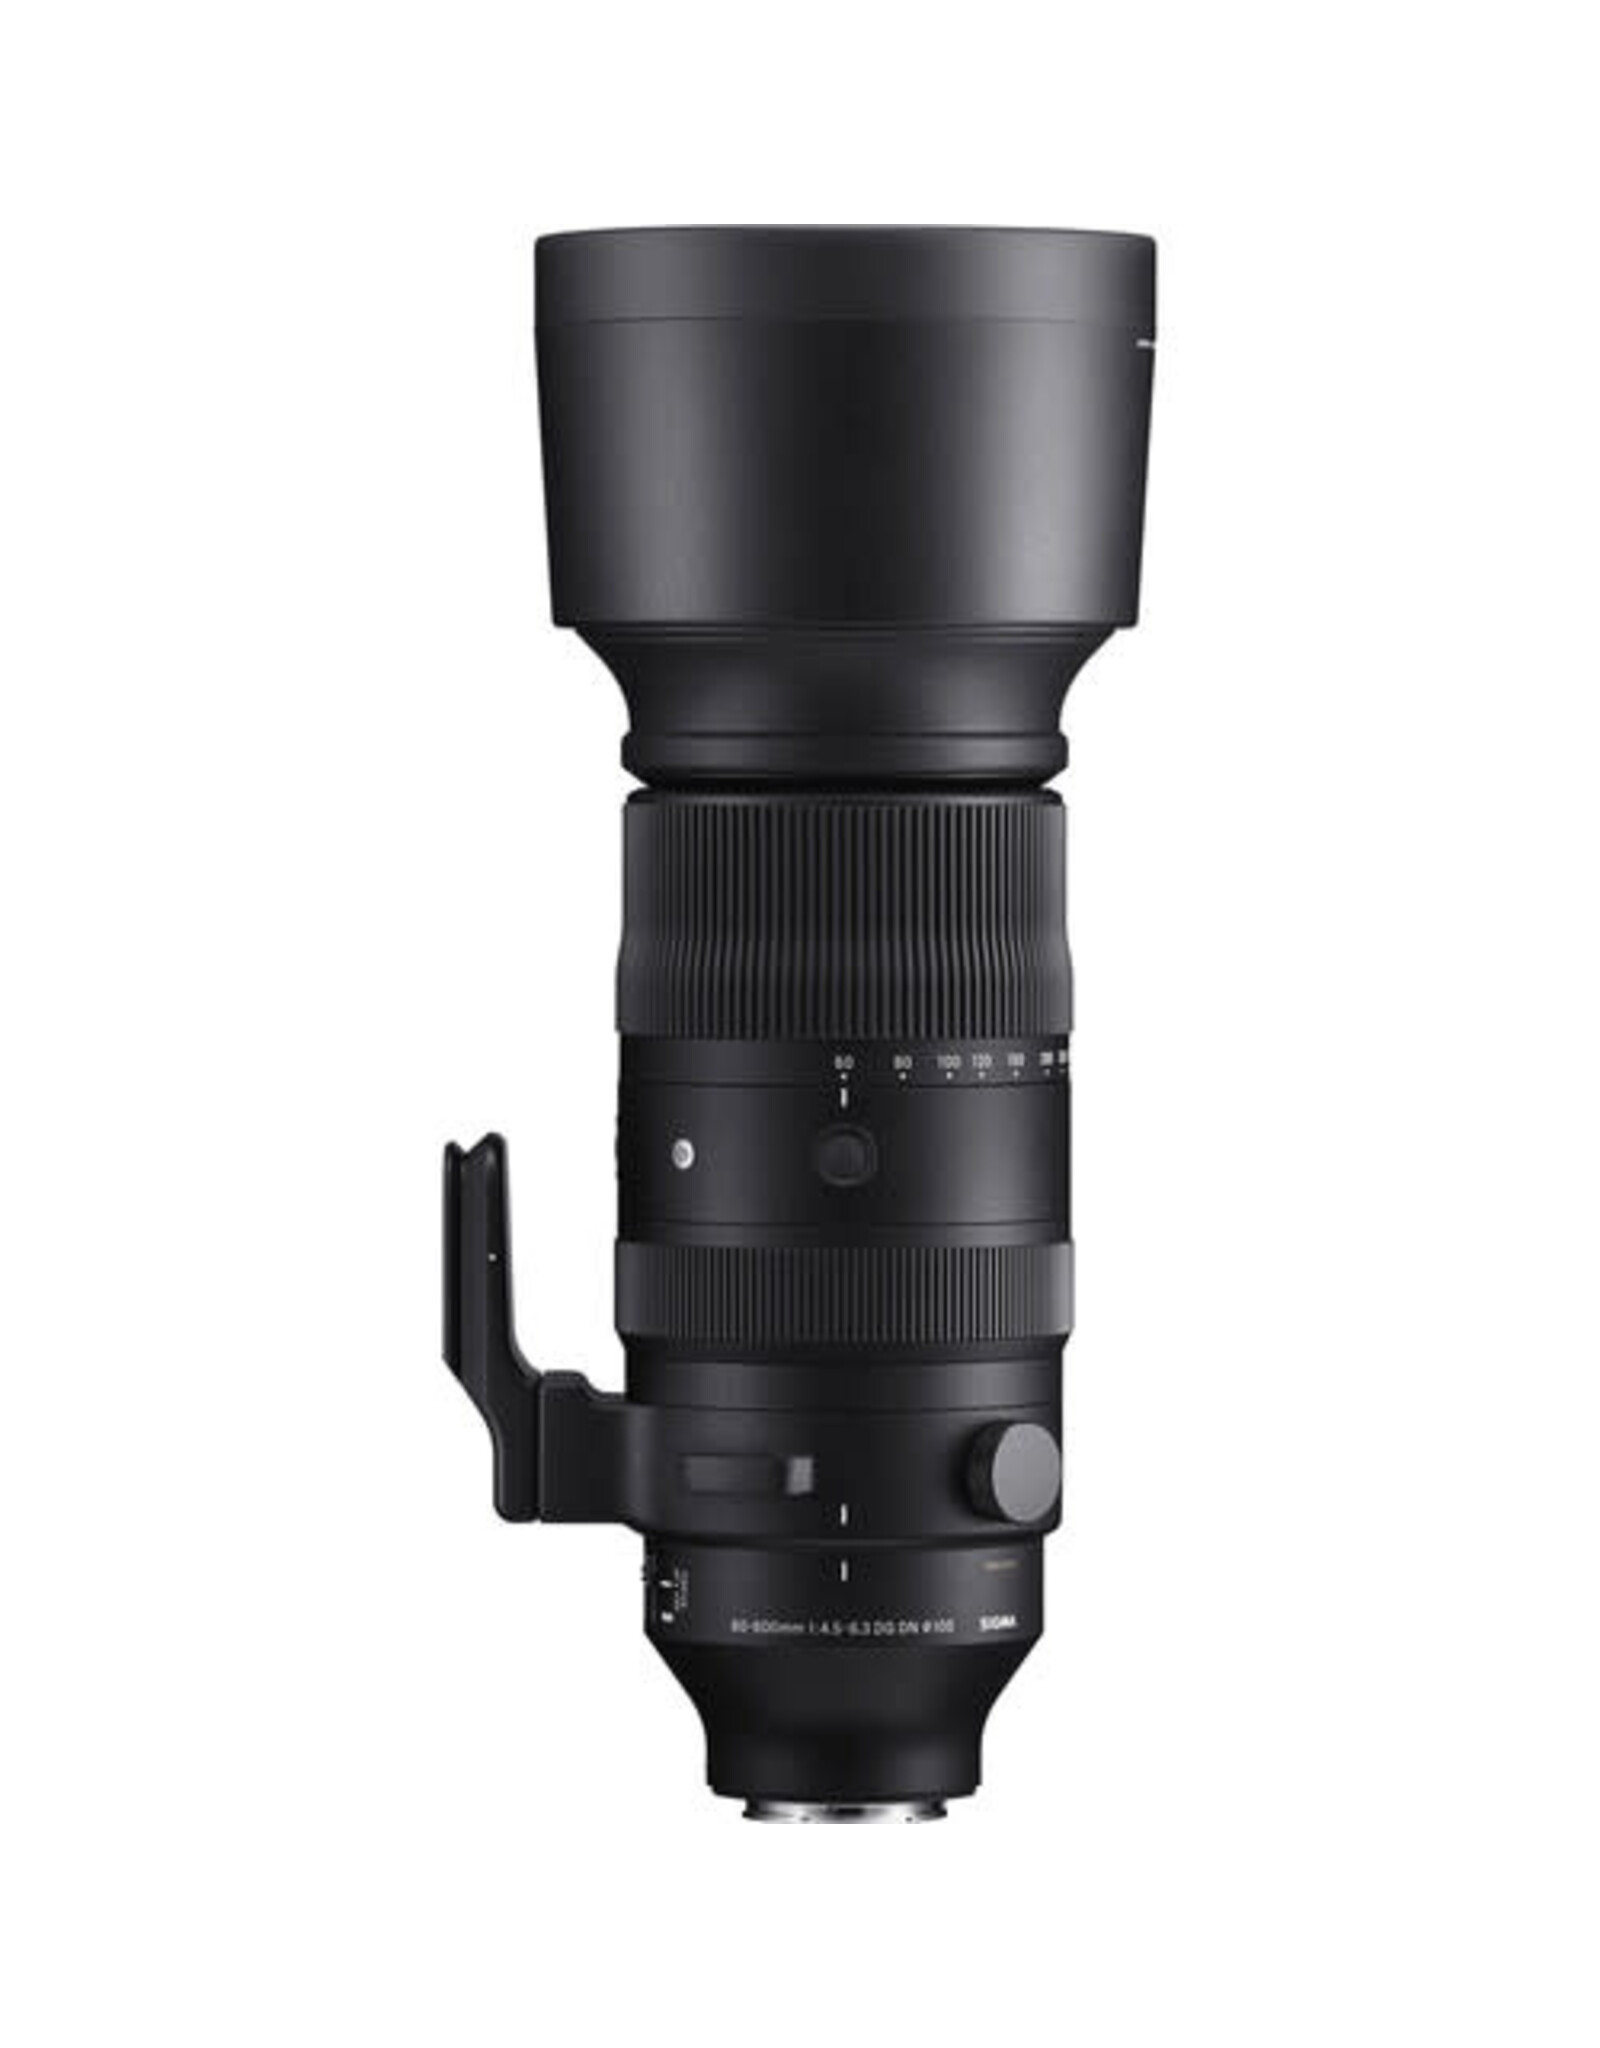 Sigma Sigma 60-600mm f/4.5-6.3 DG DN OS Sports Lens (Choose Mount)